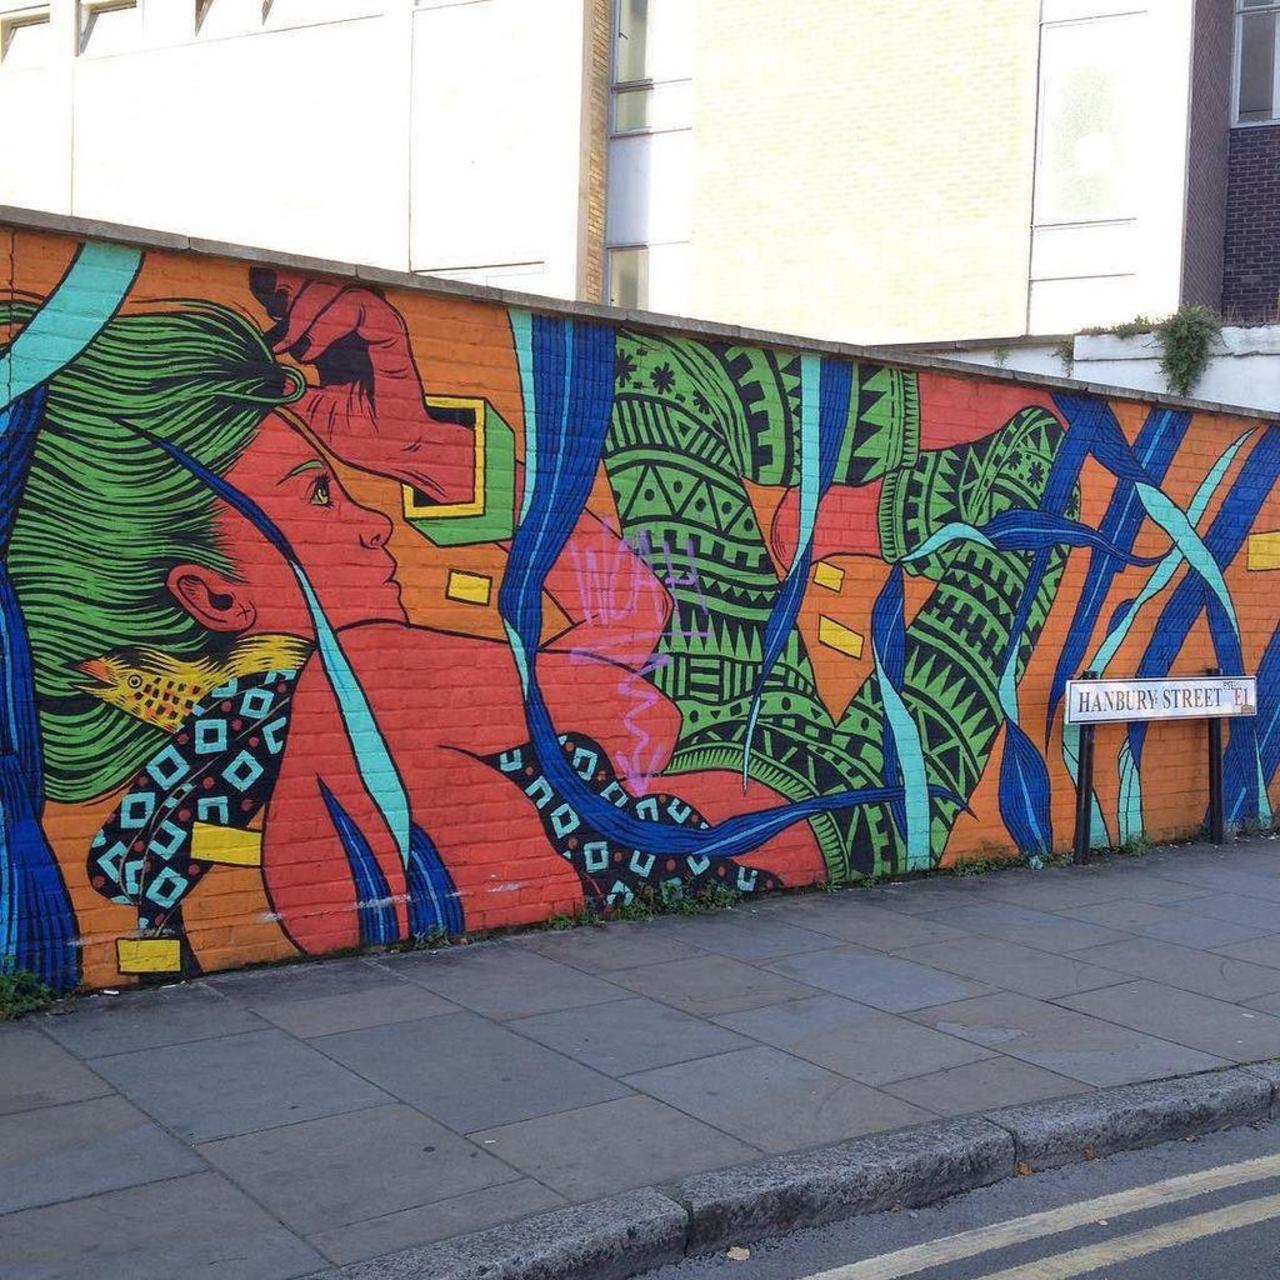 RT @StArtEverywhere: One for @deroeckie #thisislondon #streetart #streetartlondon #graffiti by isadarko http://t.co/2NIaB1vjgj